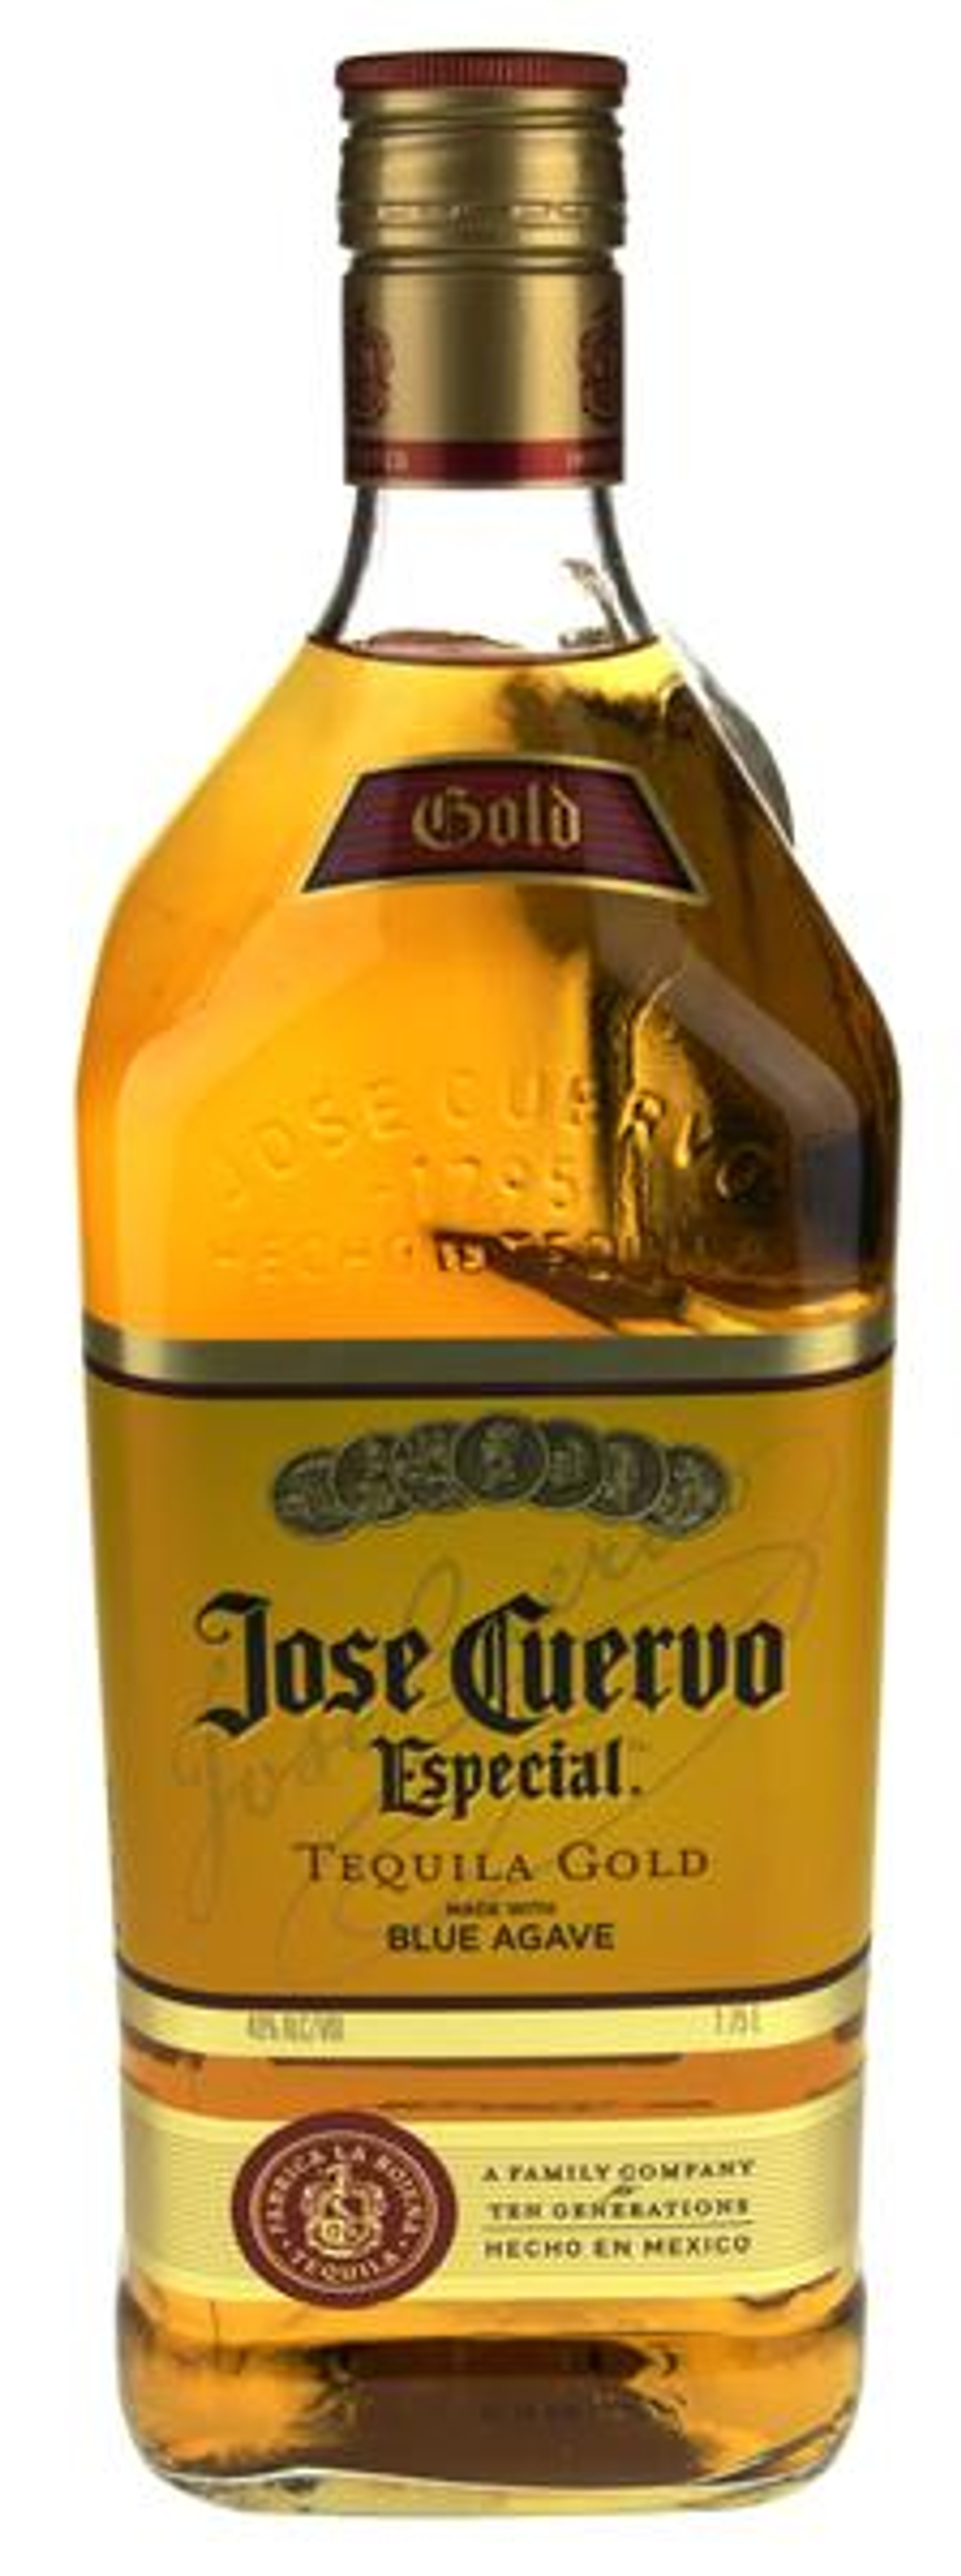 Jose Cuervo Especial Gold Half Gallon (1.75L) - Order Today